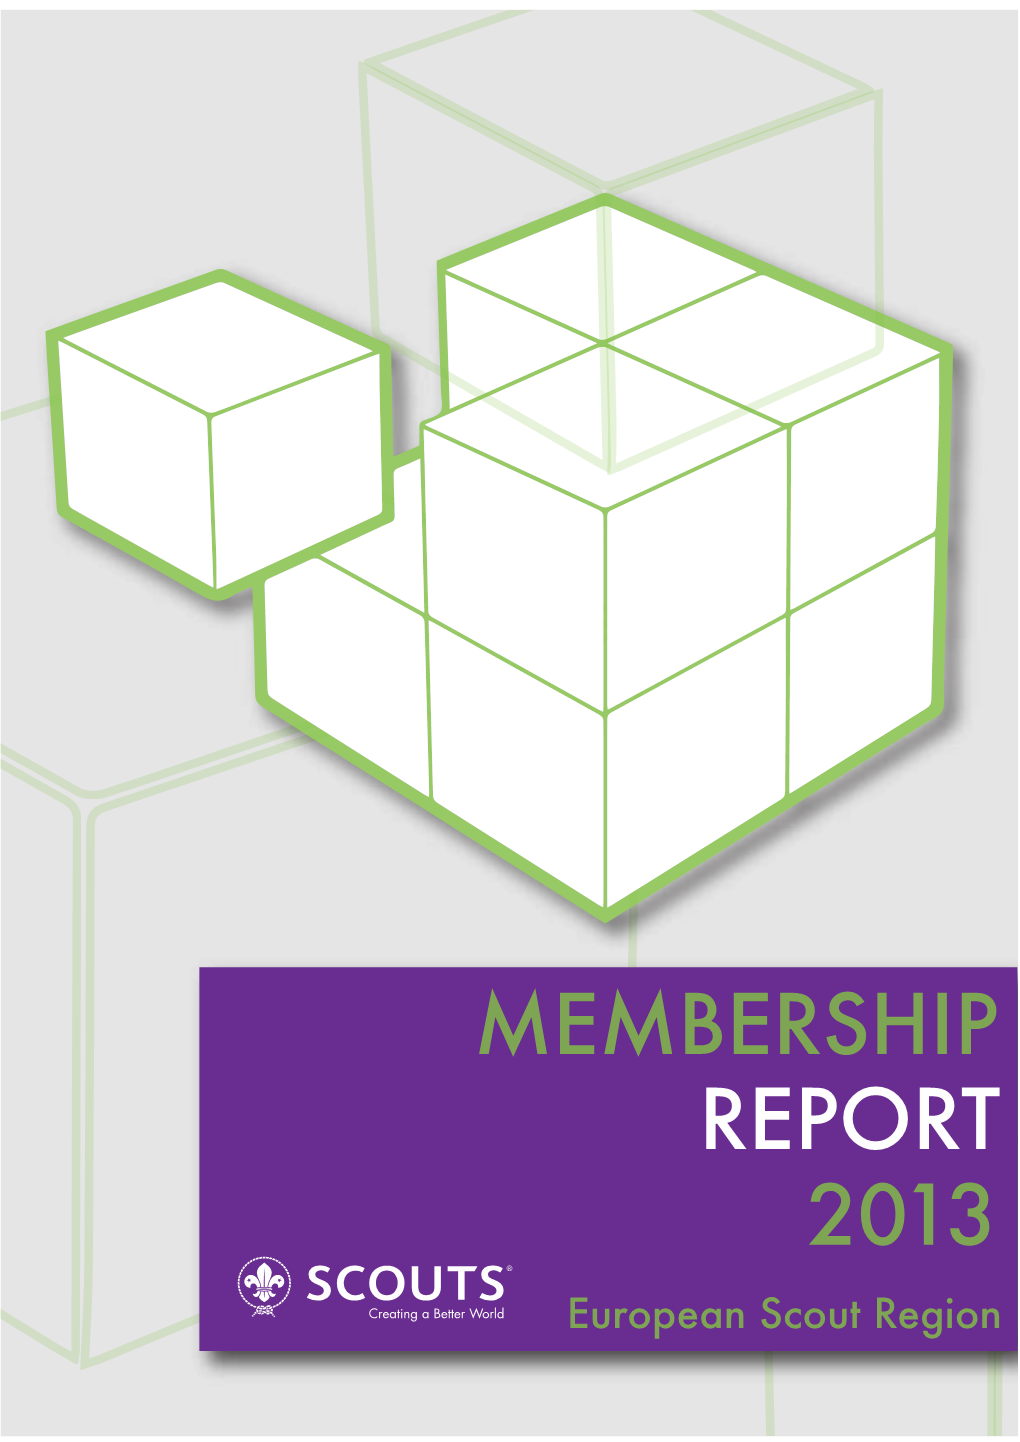 MEMBERSHIP REPORT 2013 European Scout Region